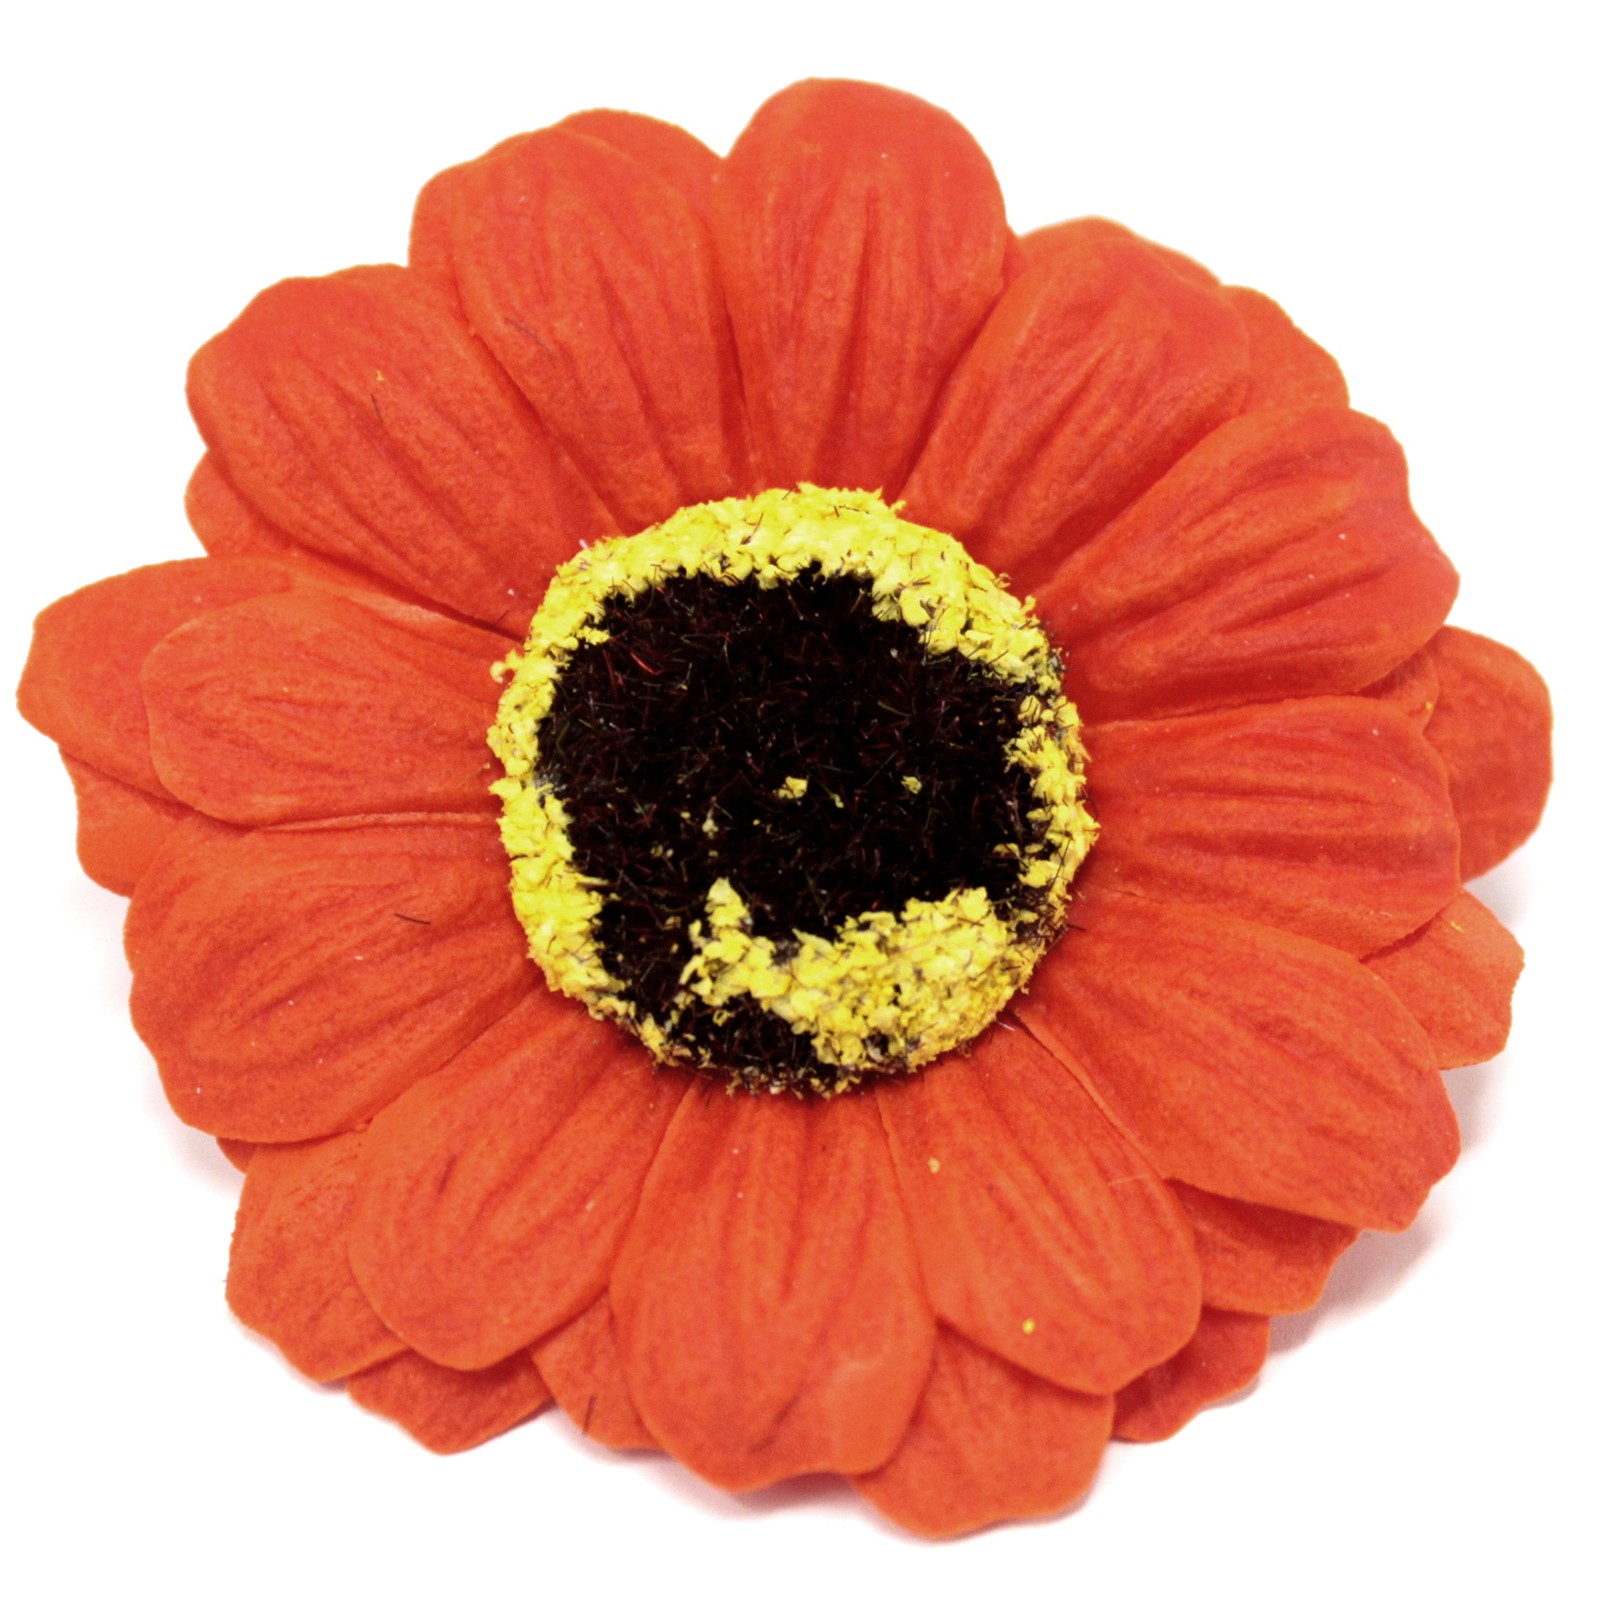 10 x Craft Soap Flowers - Sml Sunflower - Orange